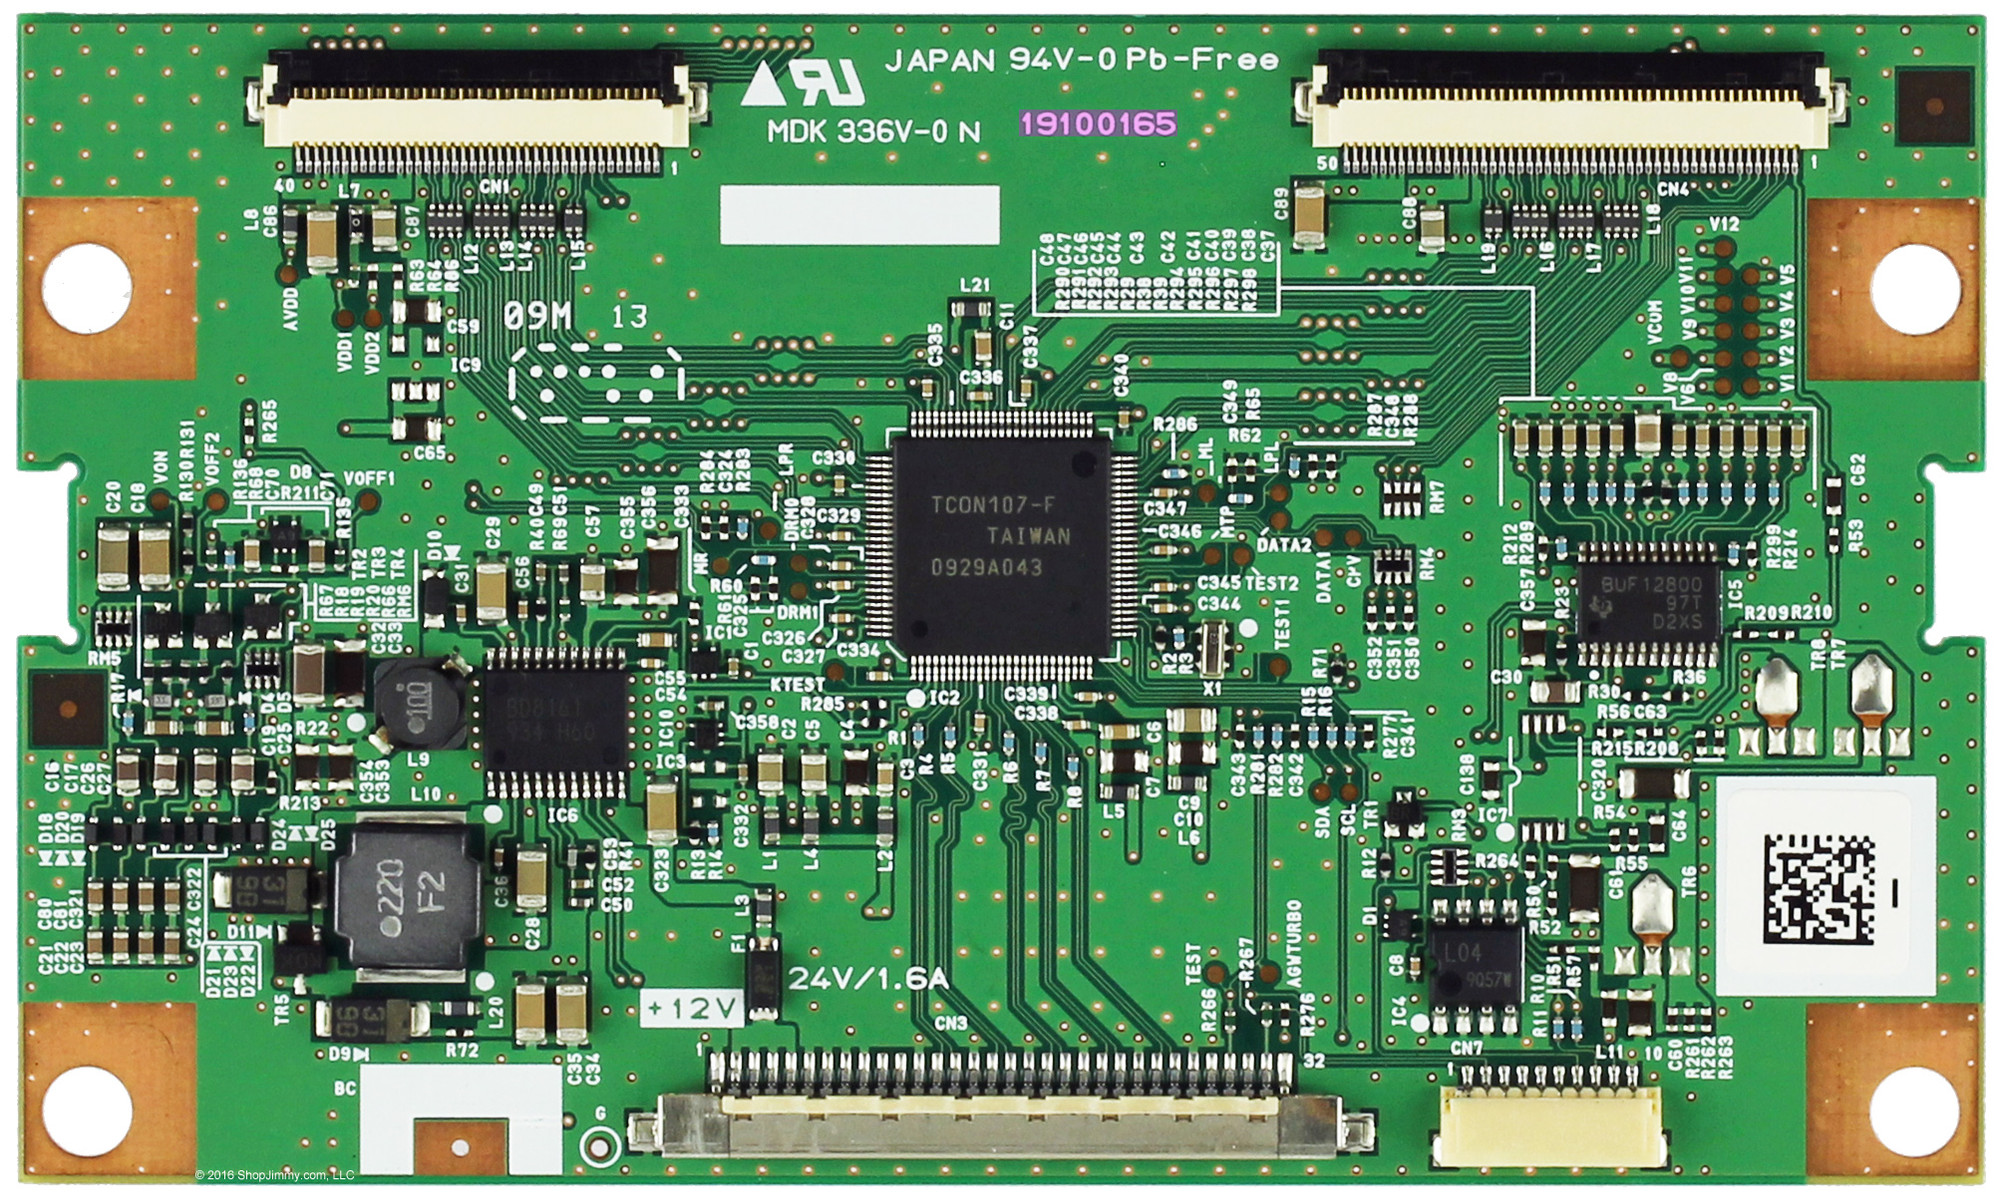 IPS Alpha 19100165 (MDK336V-0N) T-Con Board